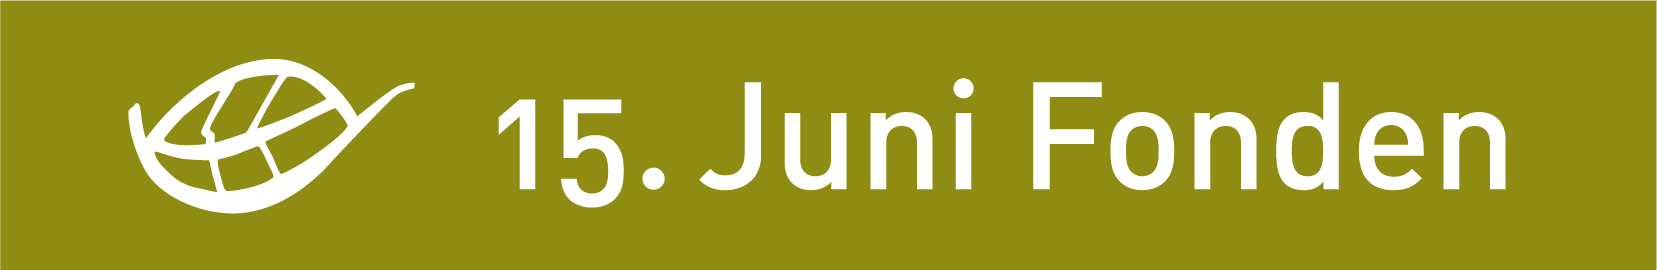 15. juni fondens logo